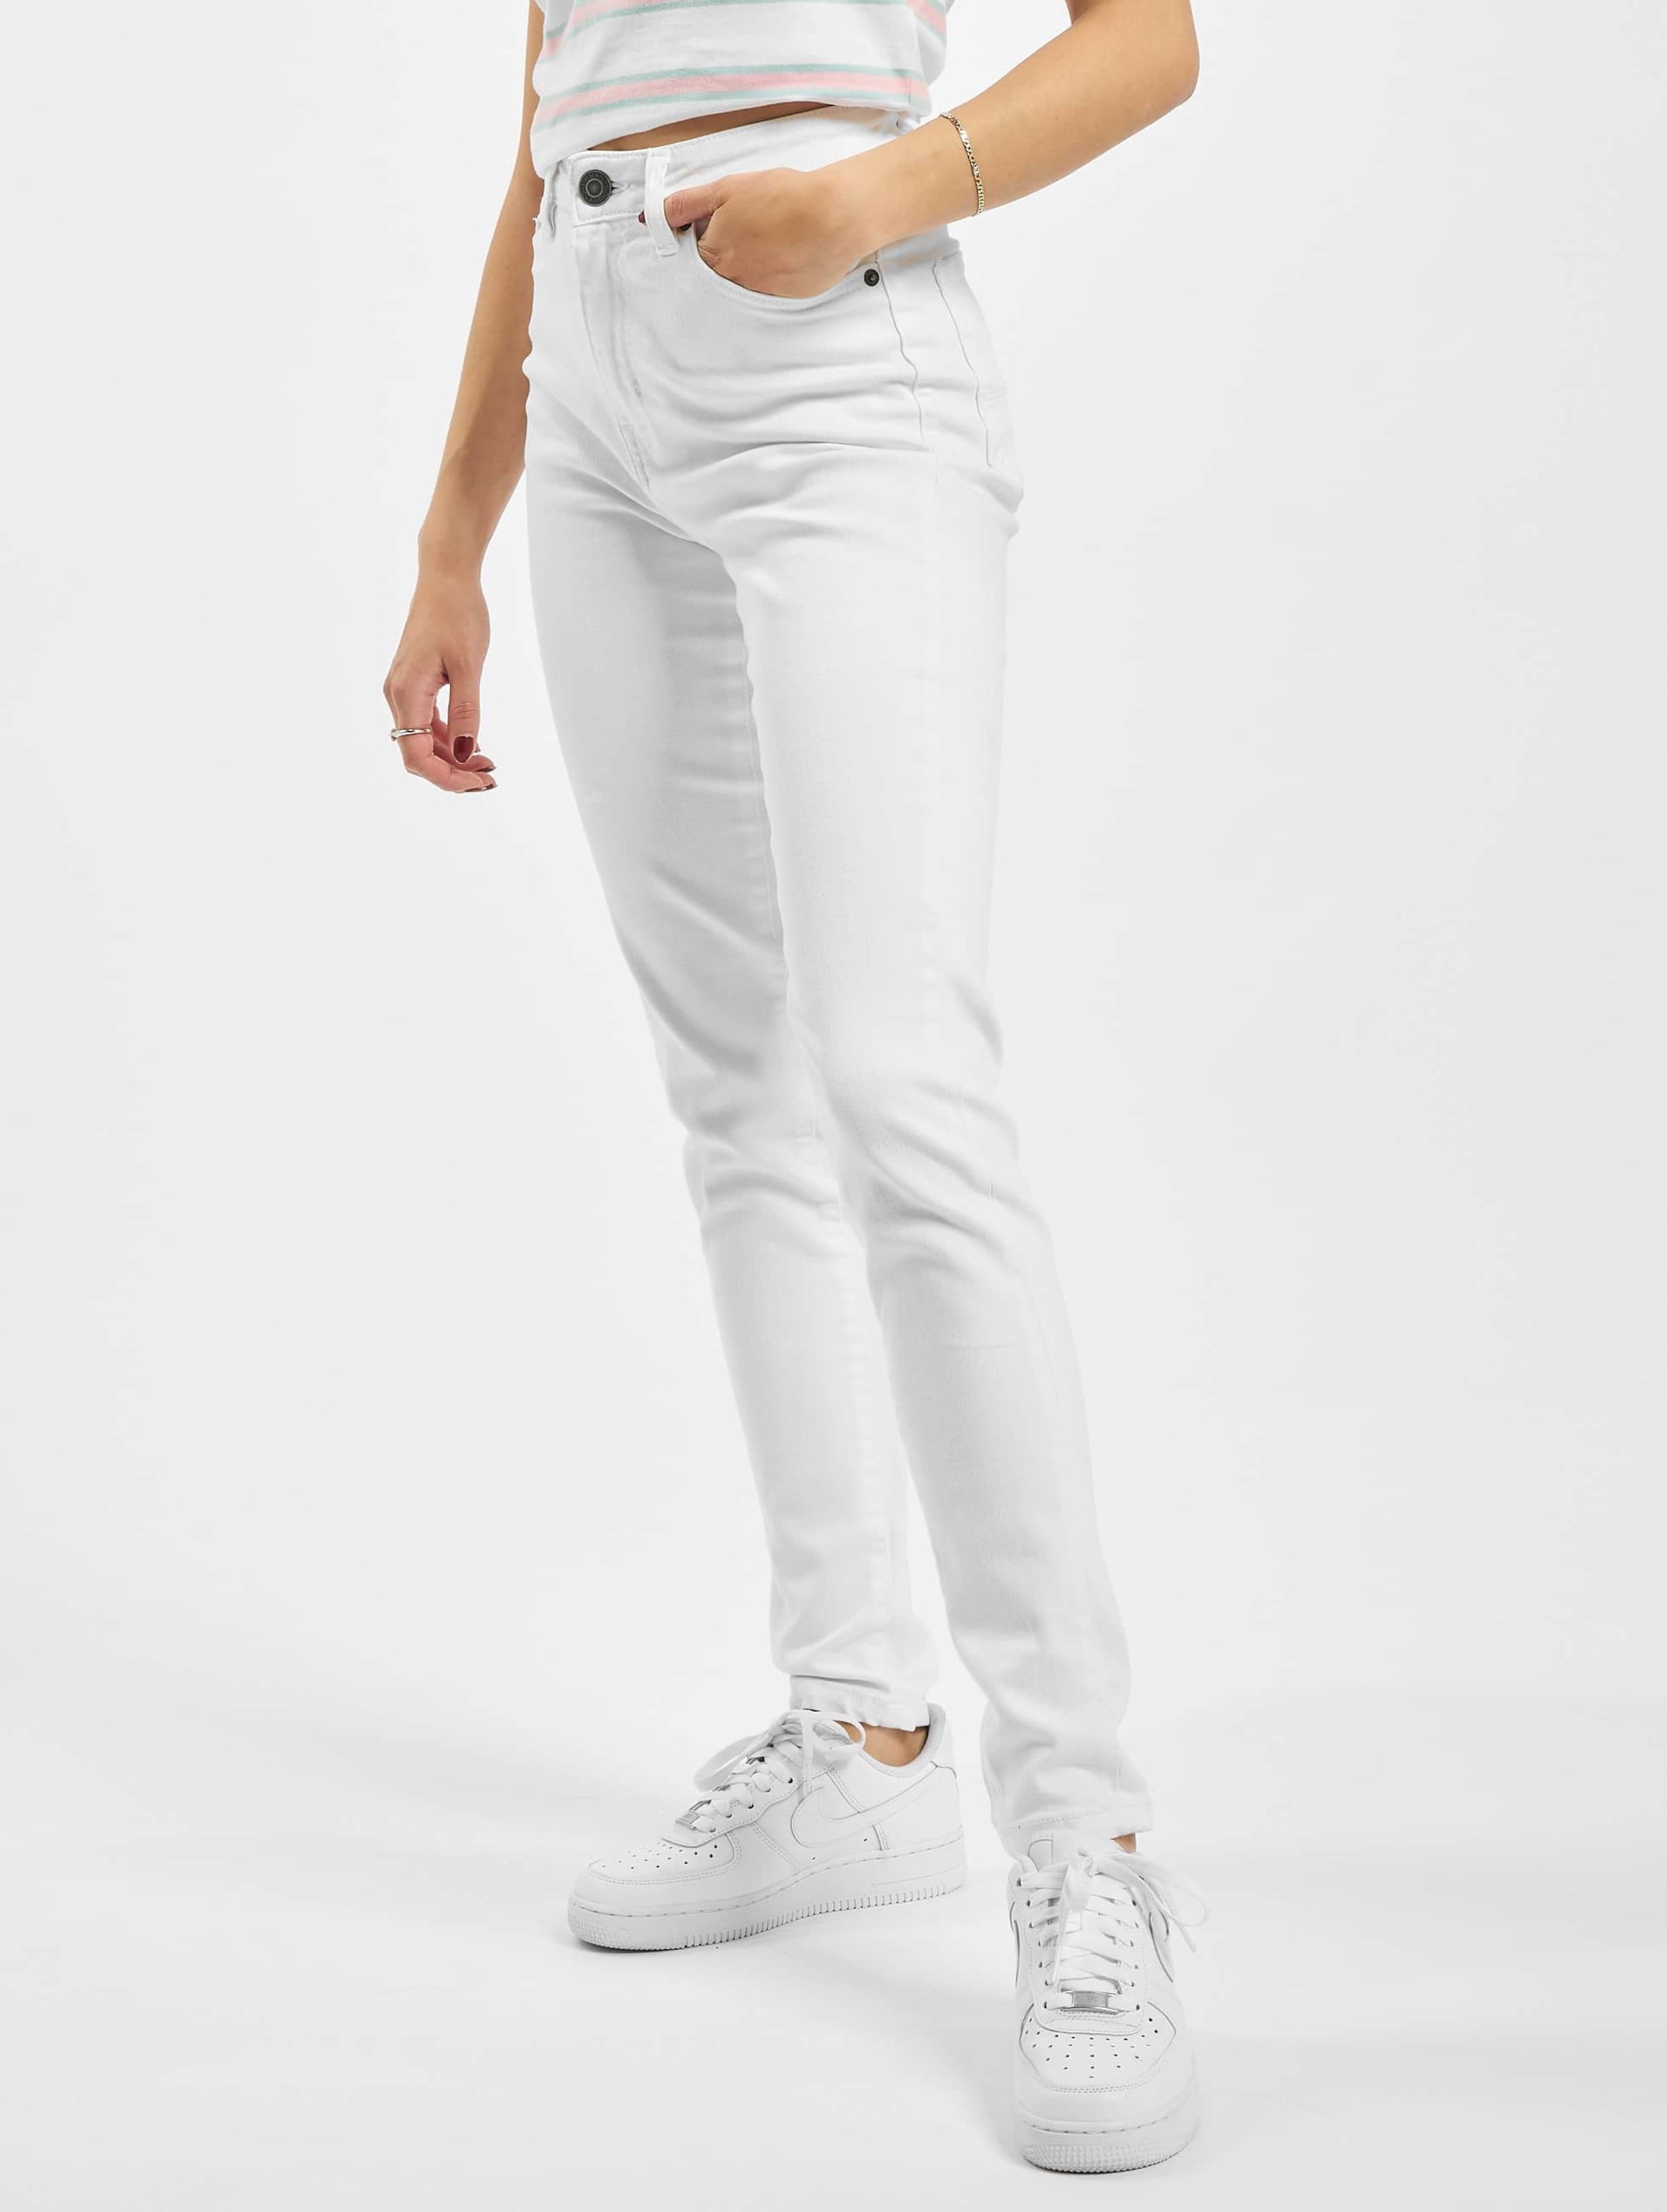 Urban Classics Ladies High Waist Skinny Jeans product